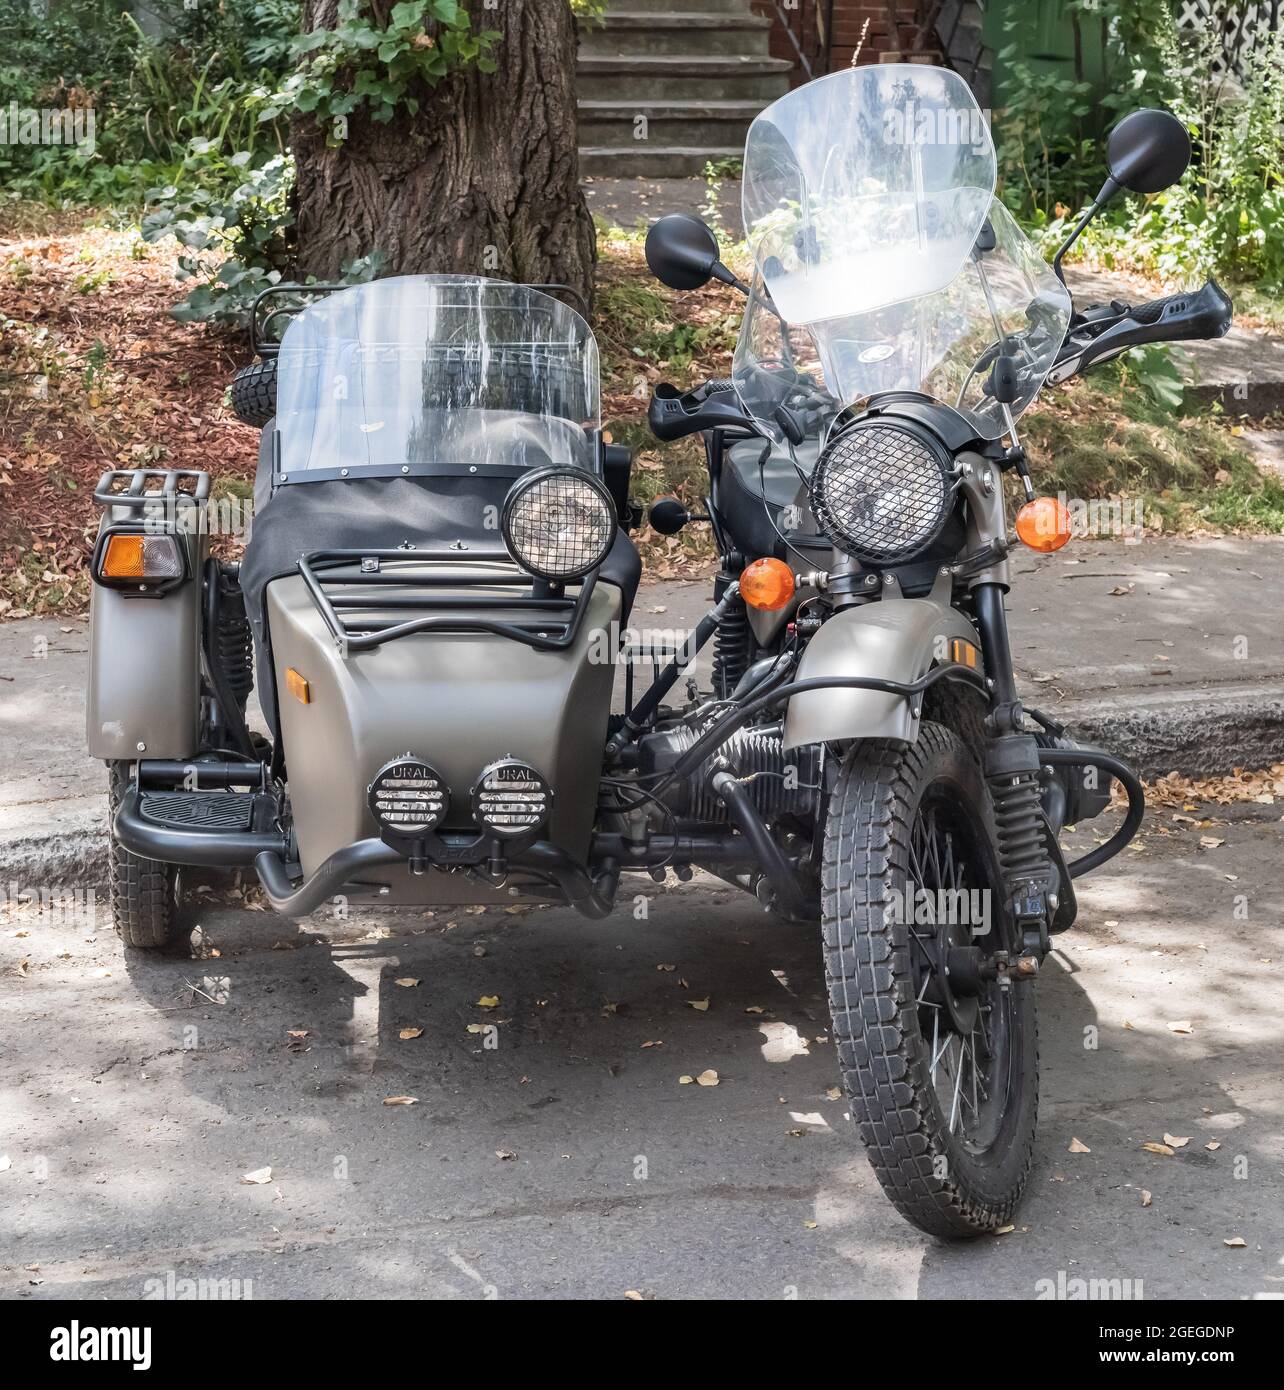 Ural Motorcycle - views Stock Photo